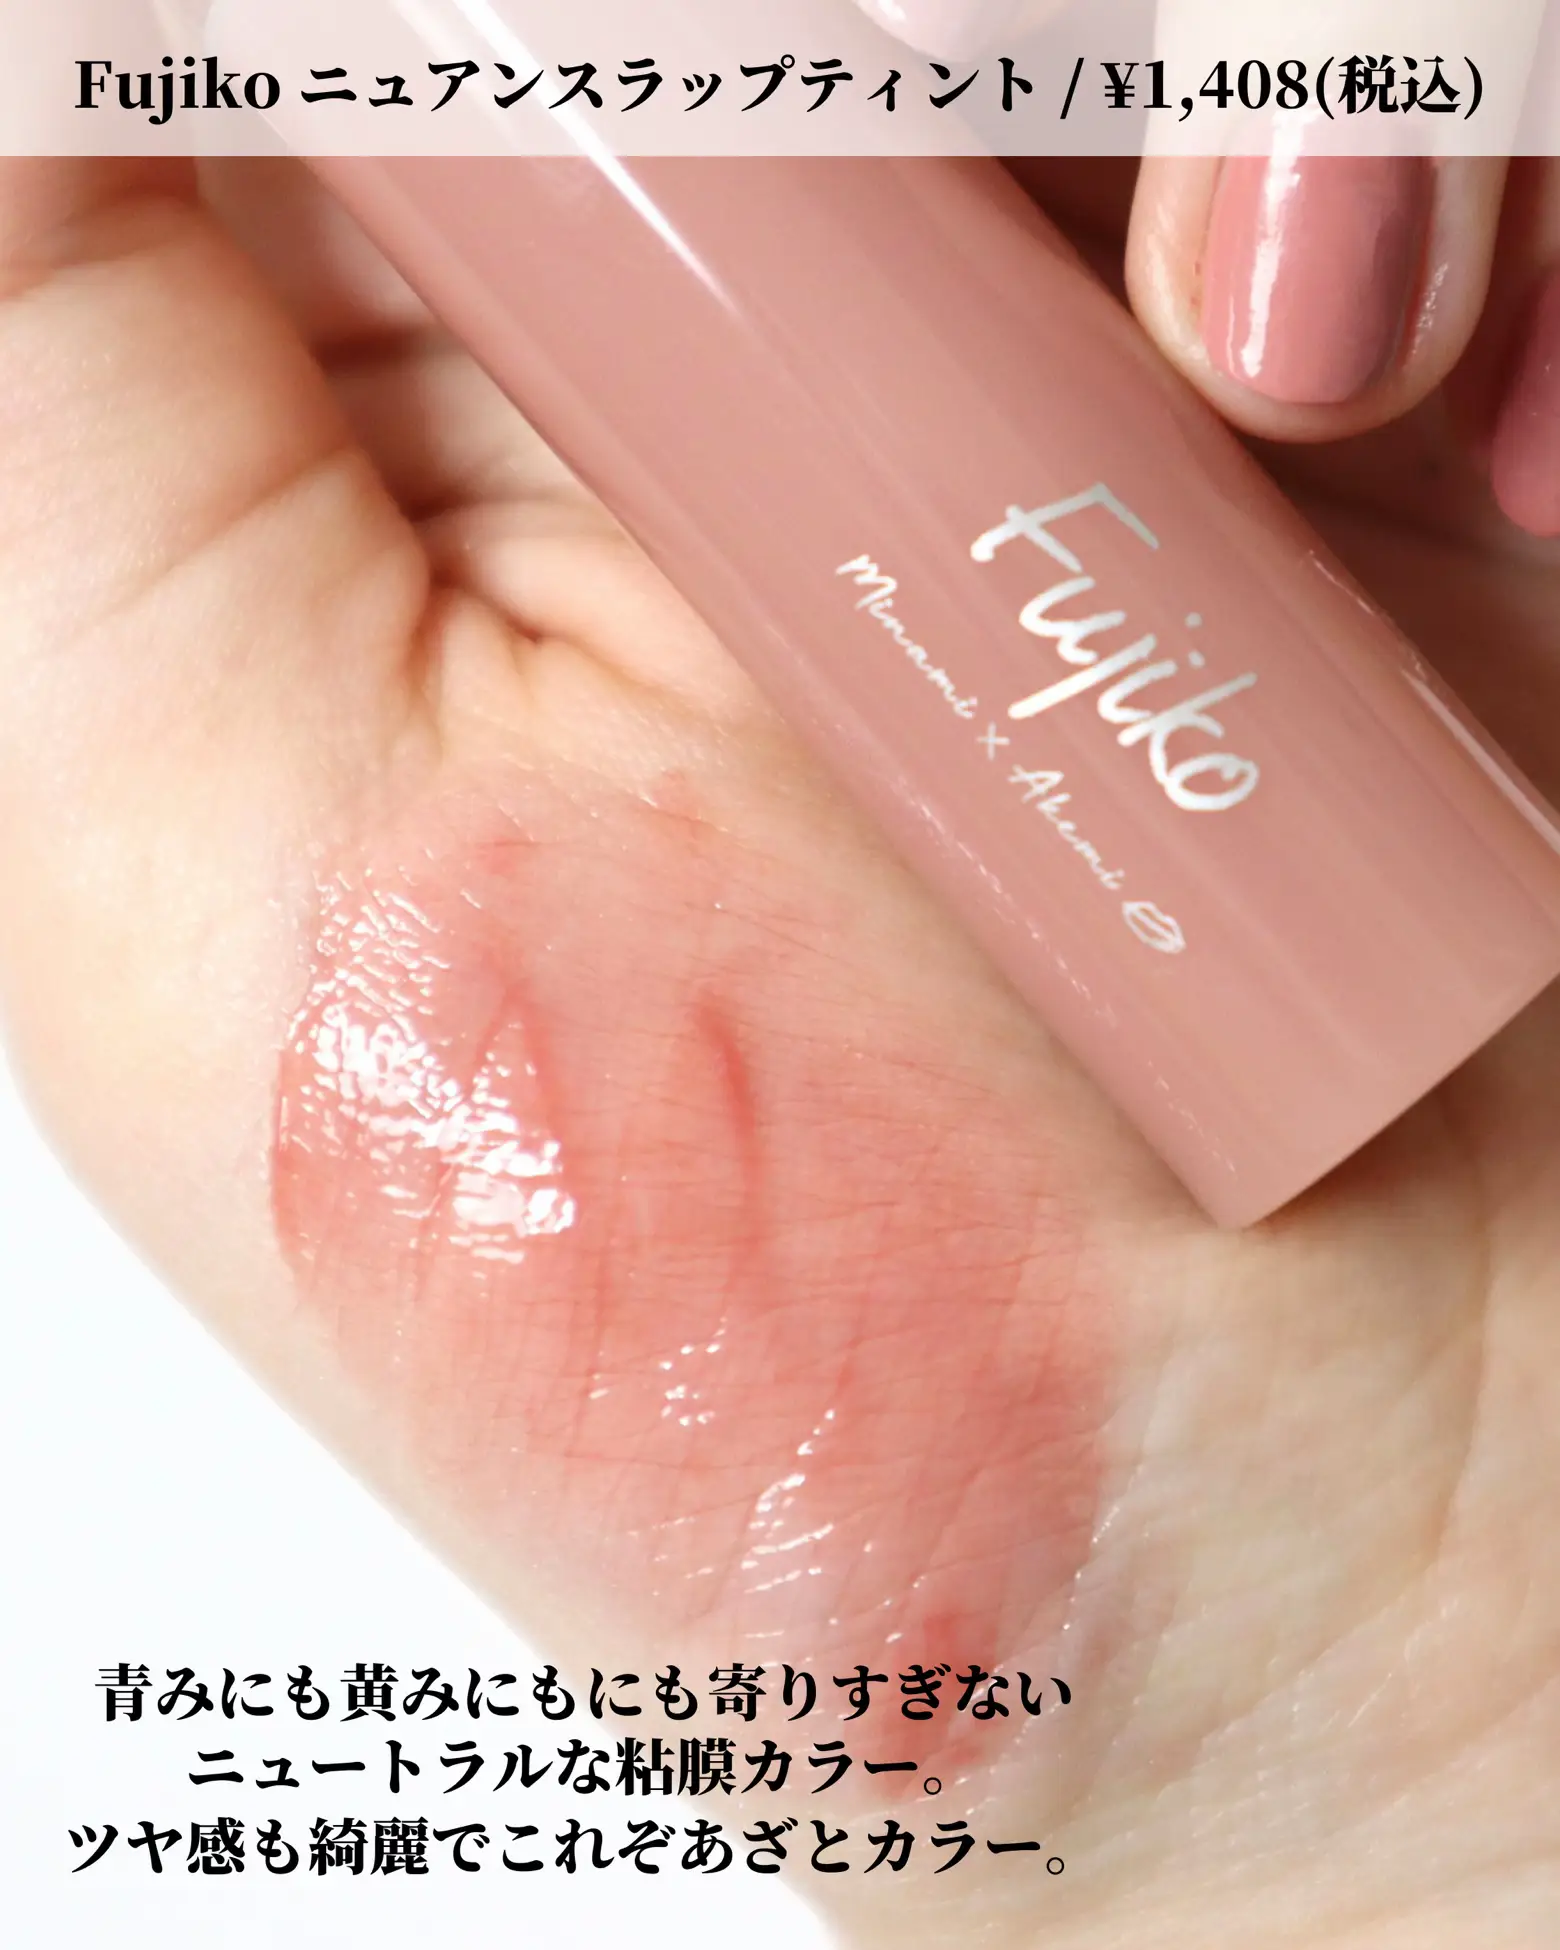 fujiko ニュアンスラップティント みな実の粘膜ピンク VOCE限定カラー